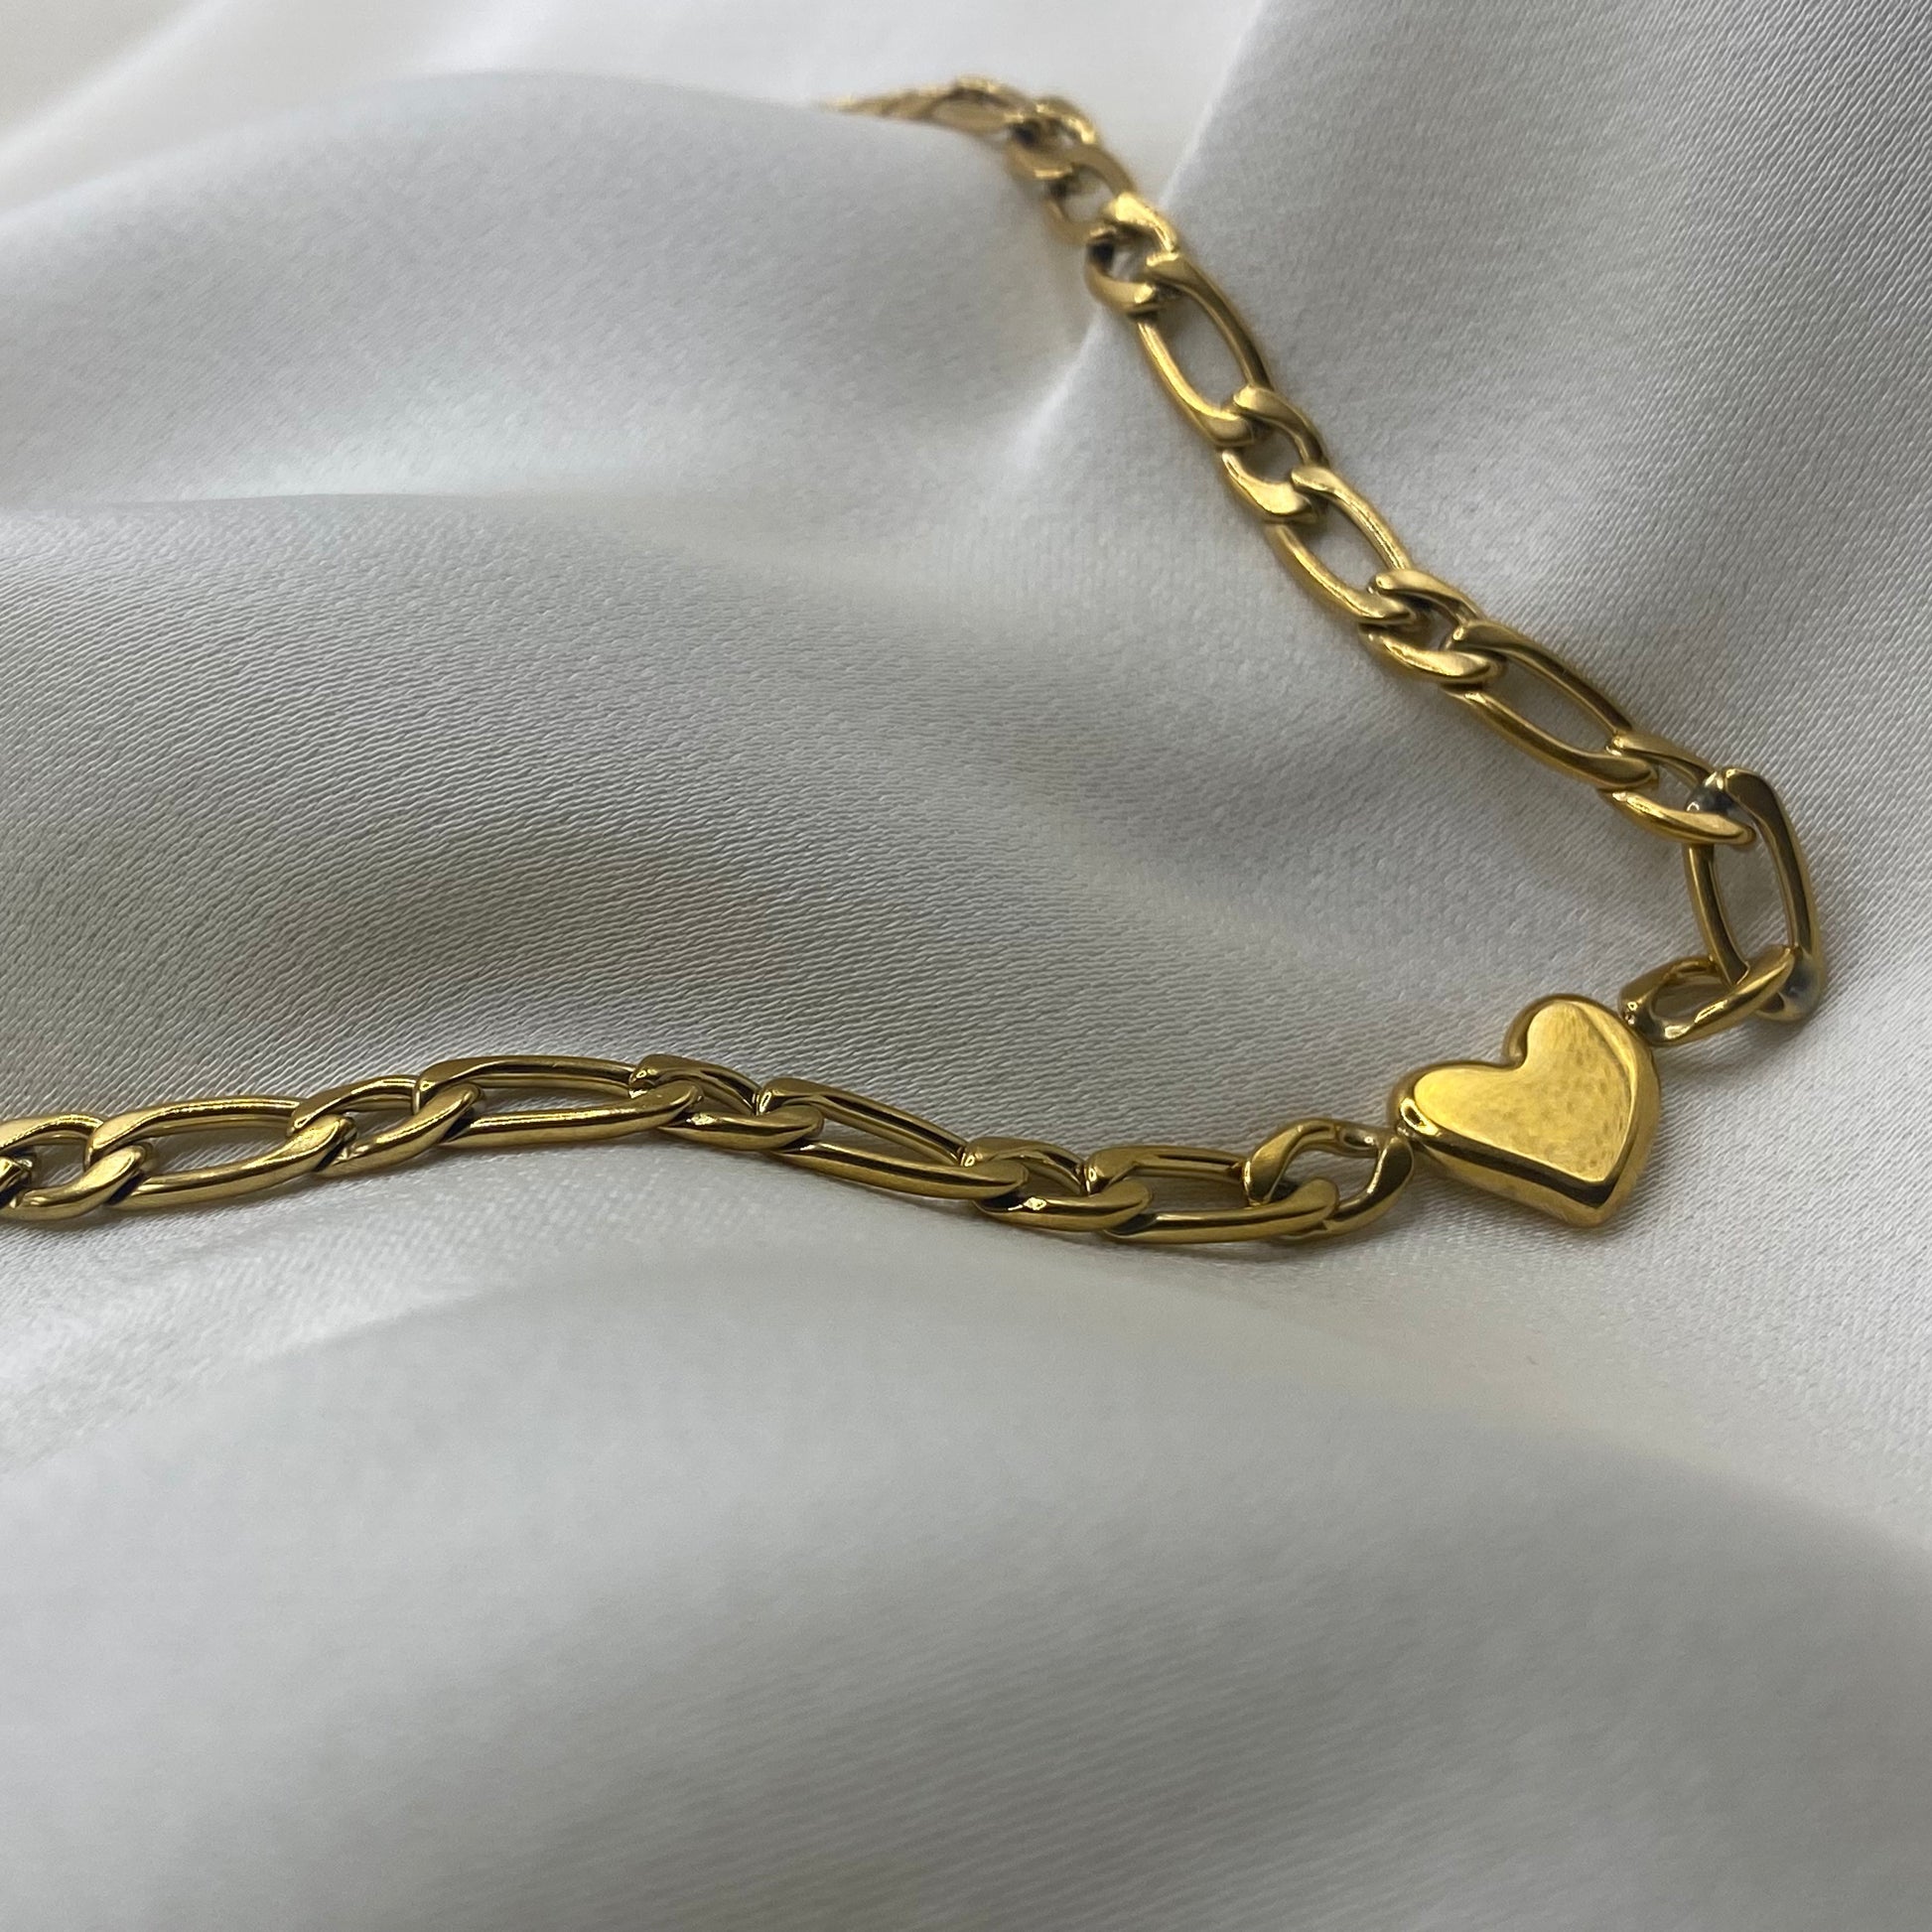 Heart Shape Necklace